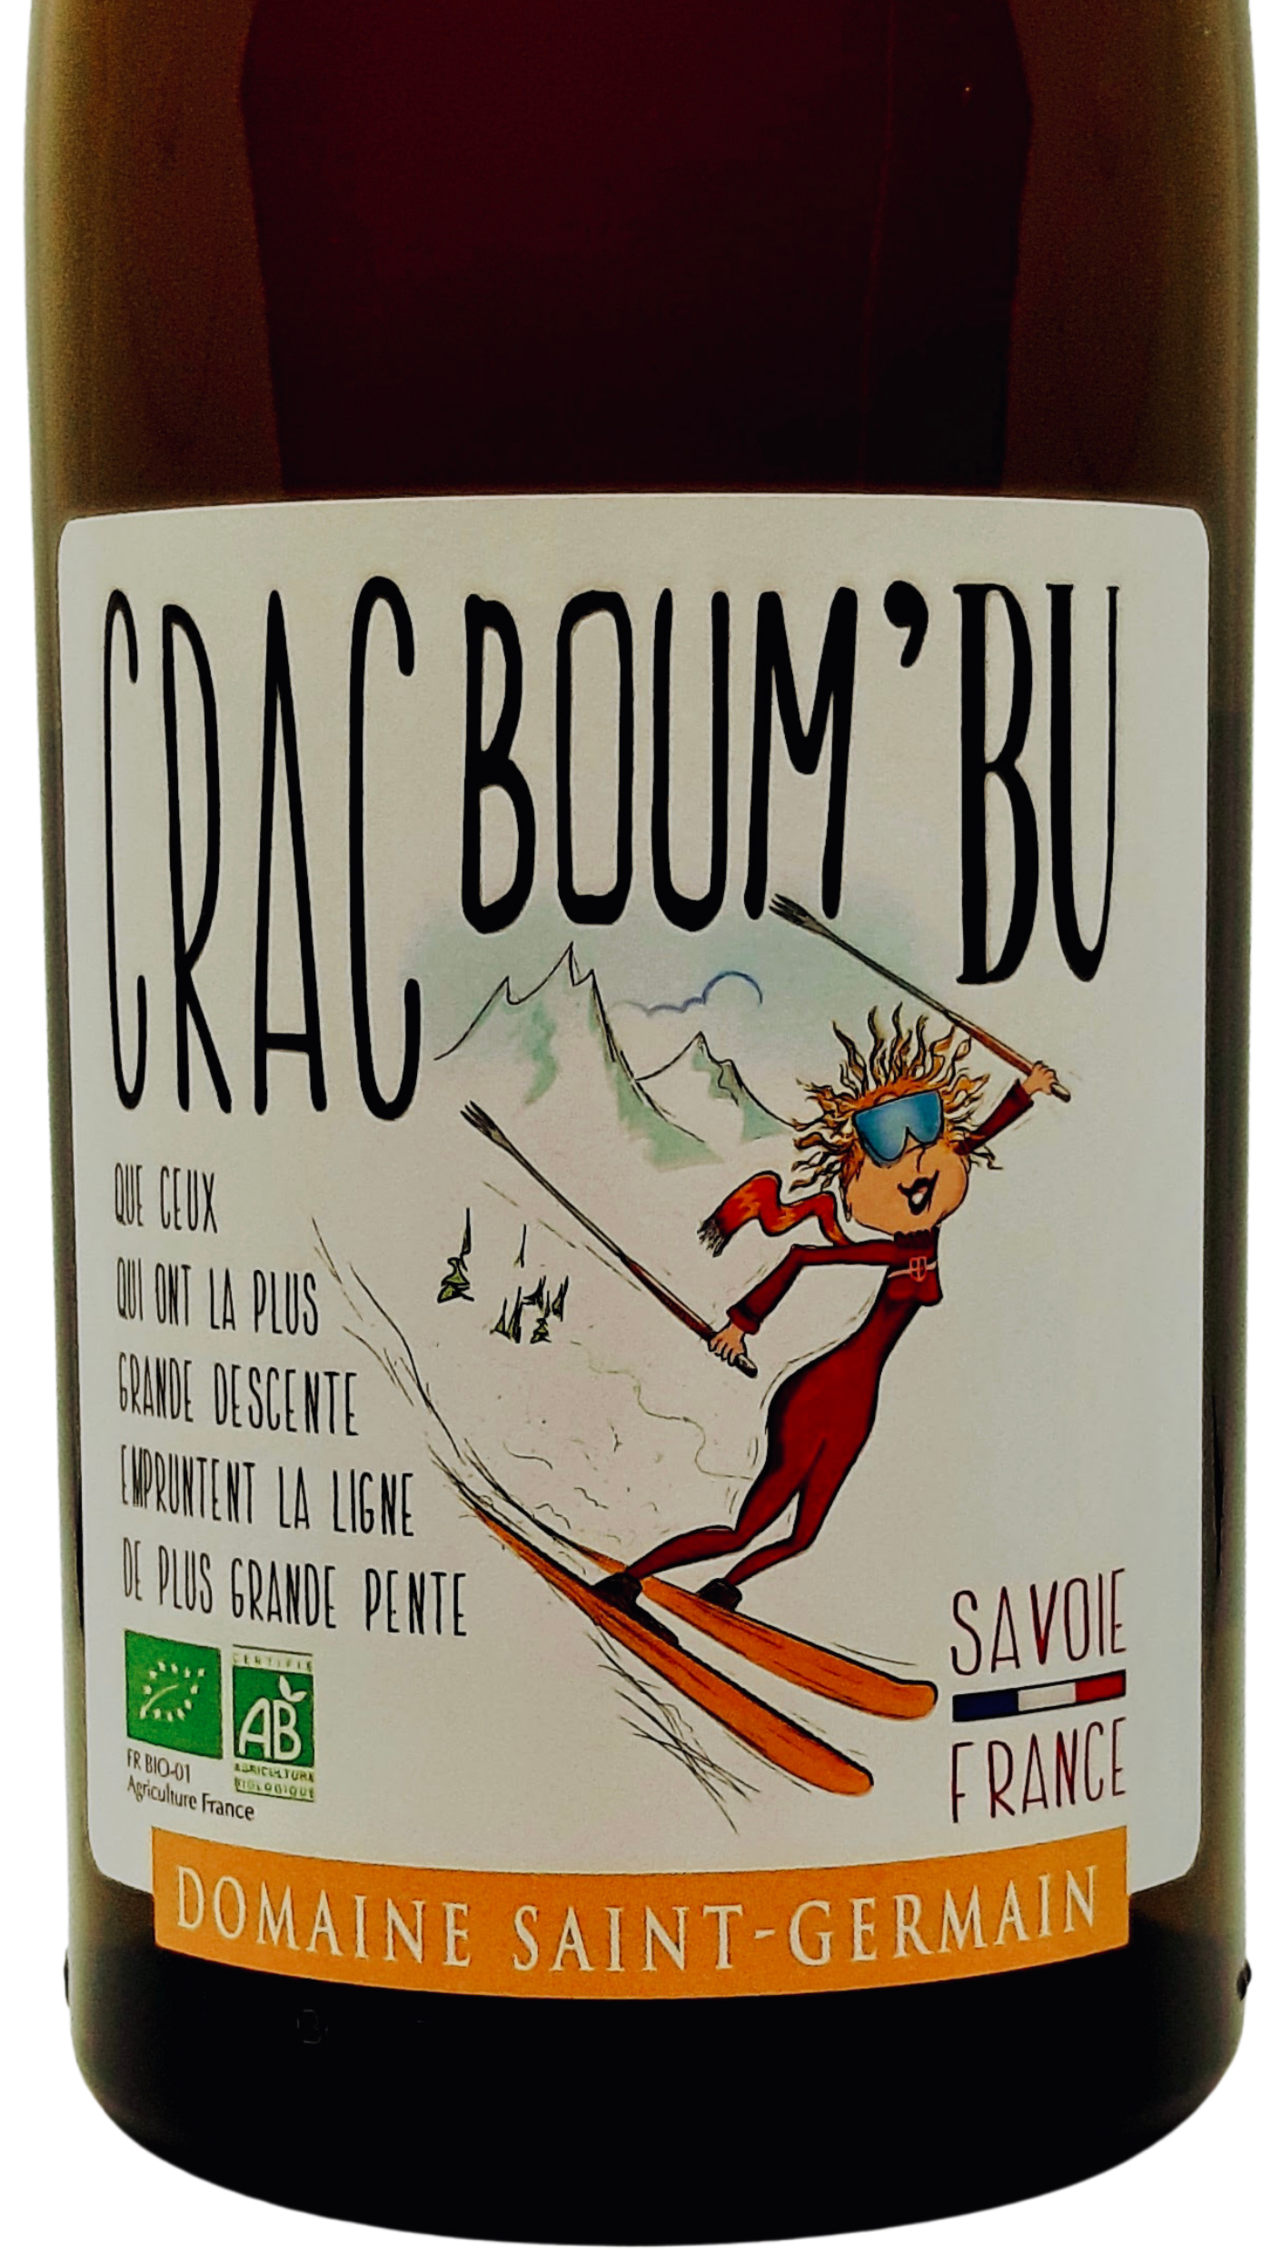 saintgermain-crac-boum-bu-blanc-2019